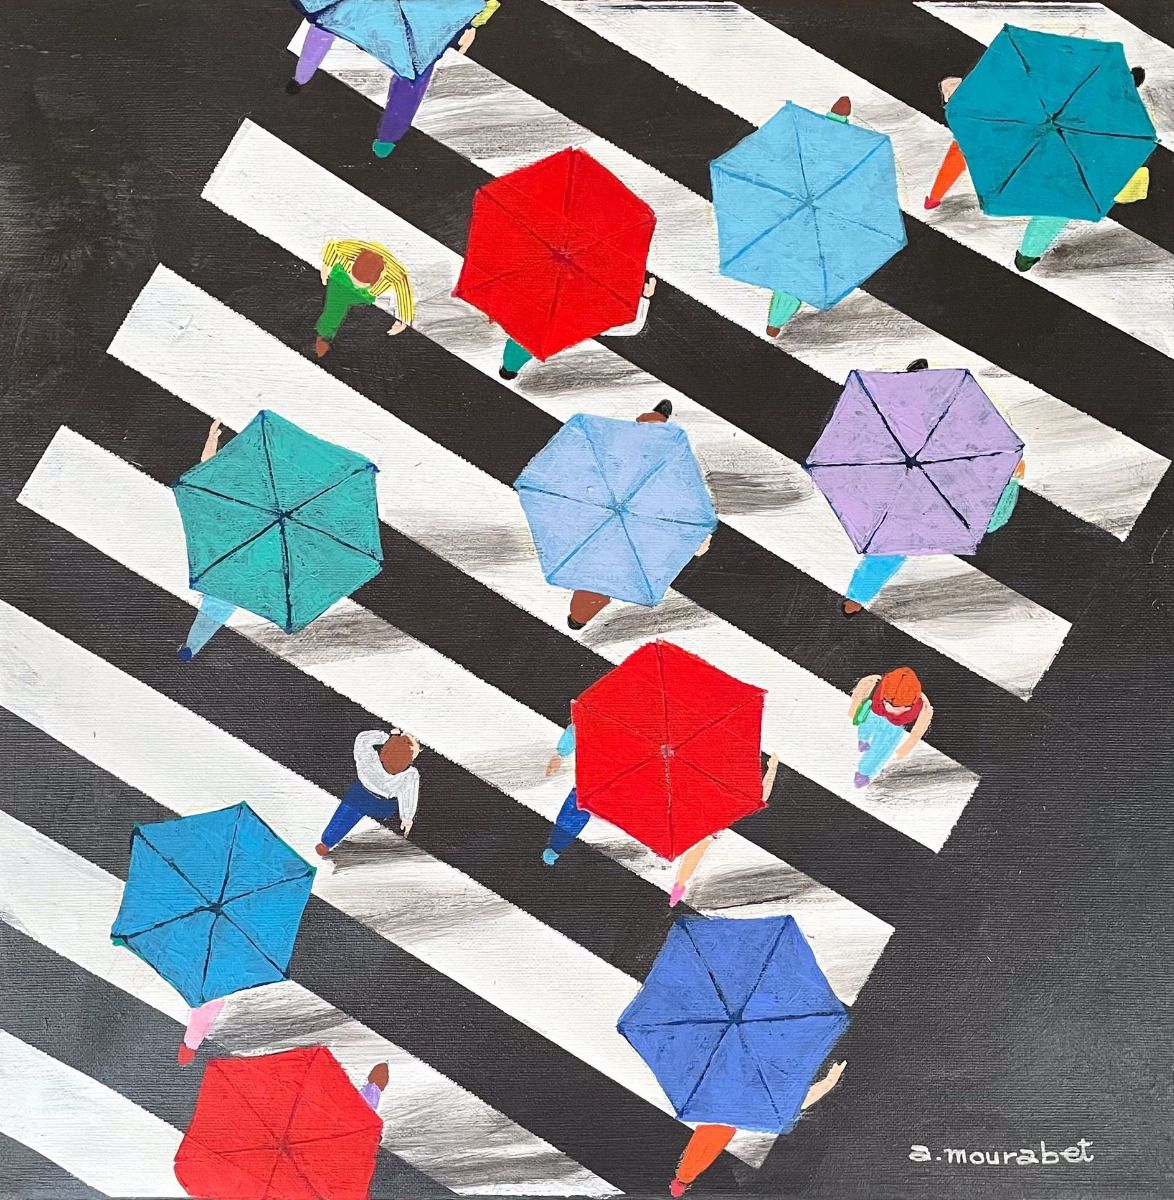 Umbrellas Crossing by Ali Mourabet